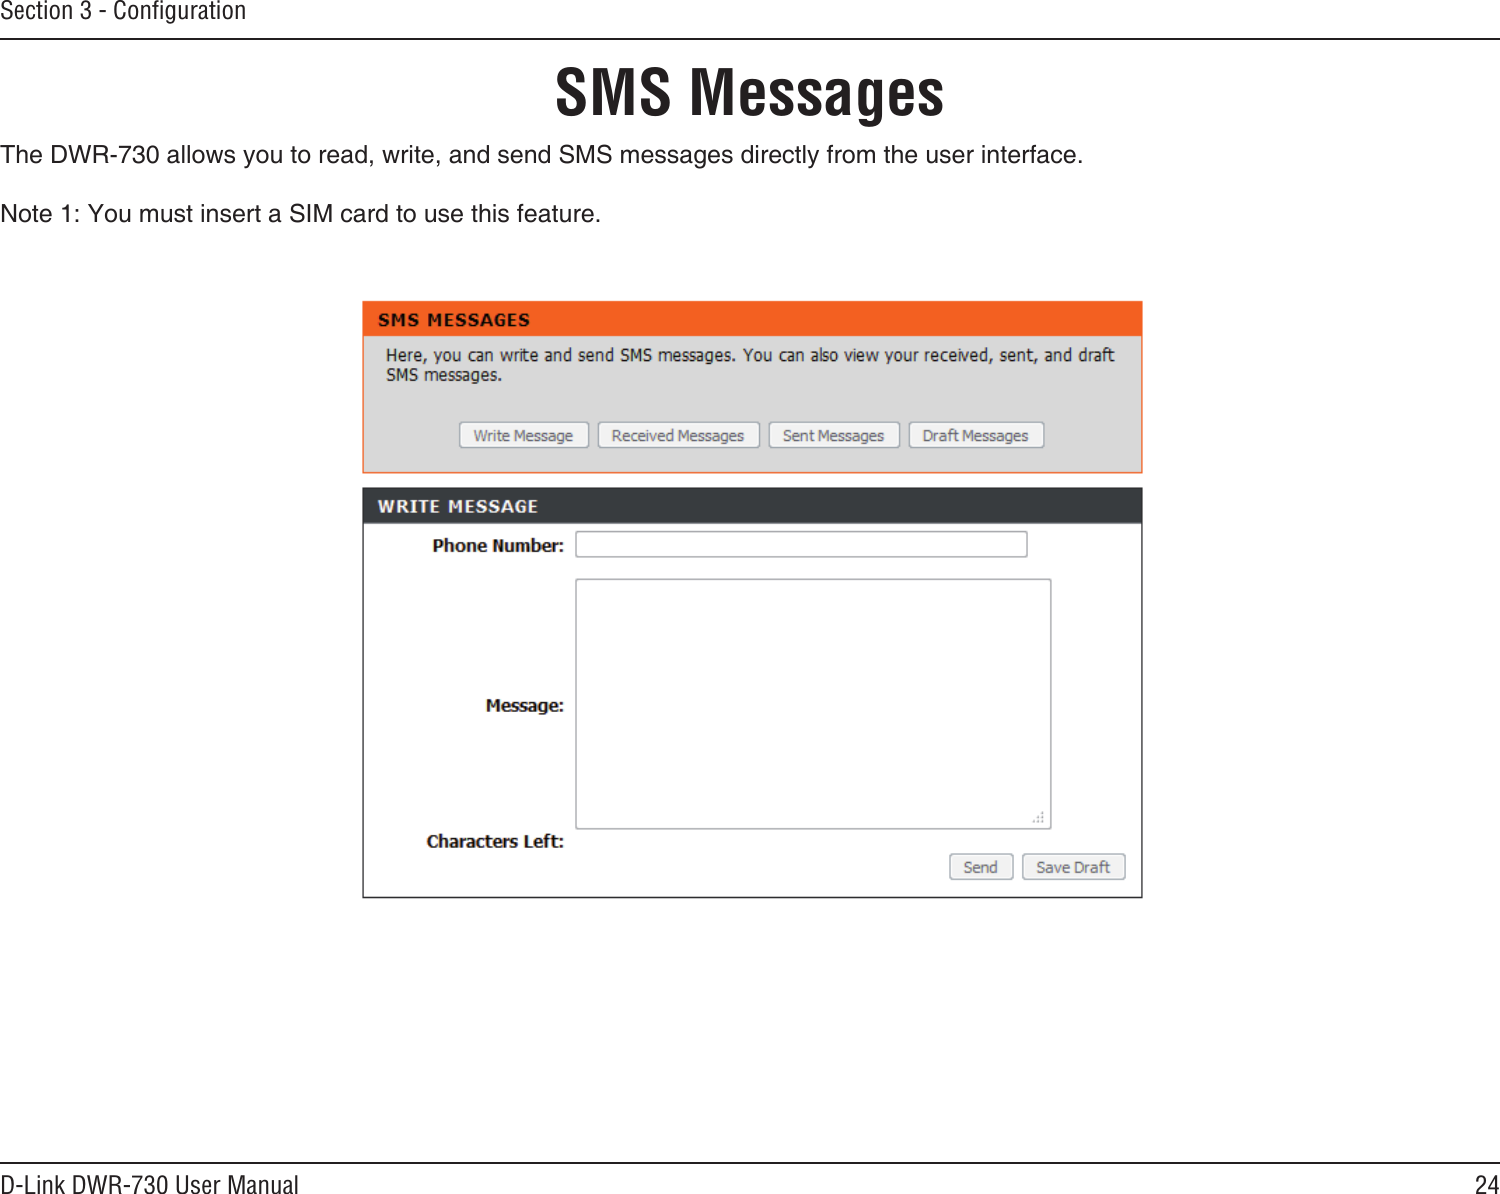 24D-Link DWR-730 User ManualSection 3 - ConﬁgurationSMS Messages